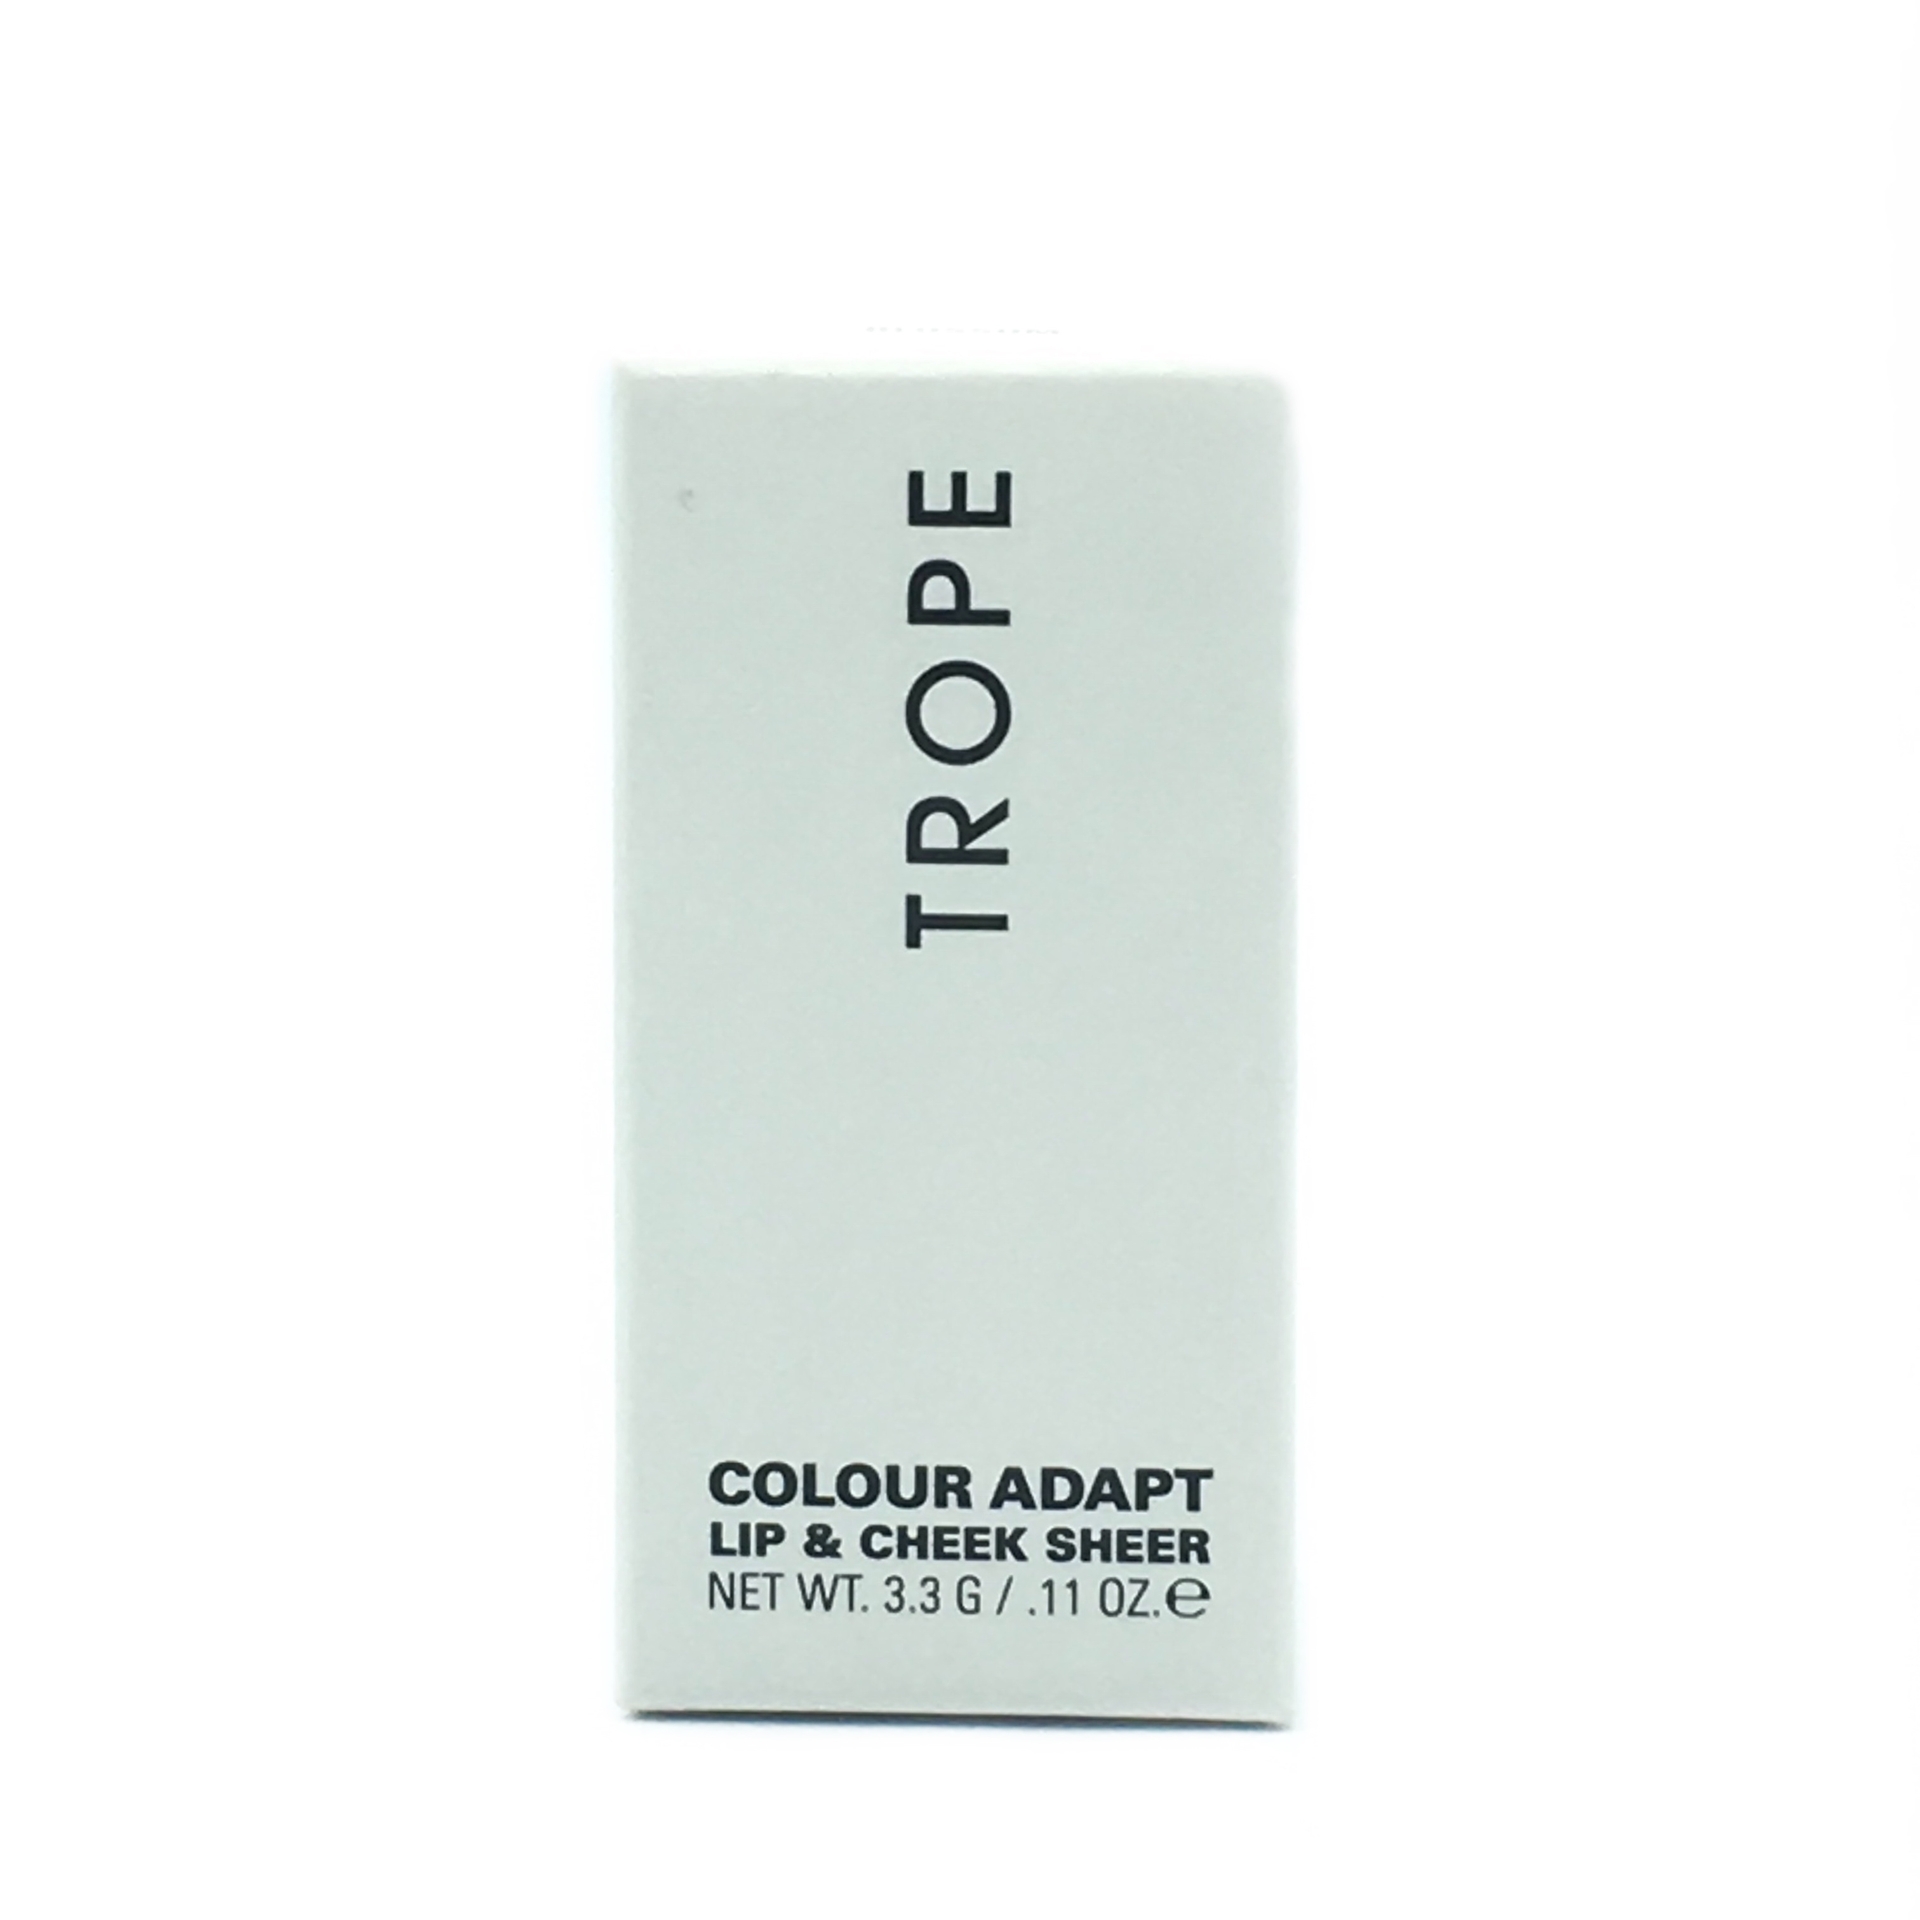 Trope Colour Adapt Lip & Cheek Sheer Lips